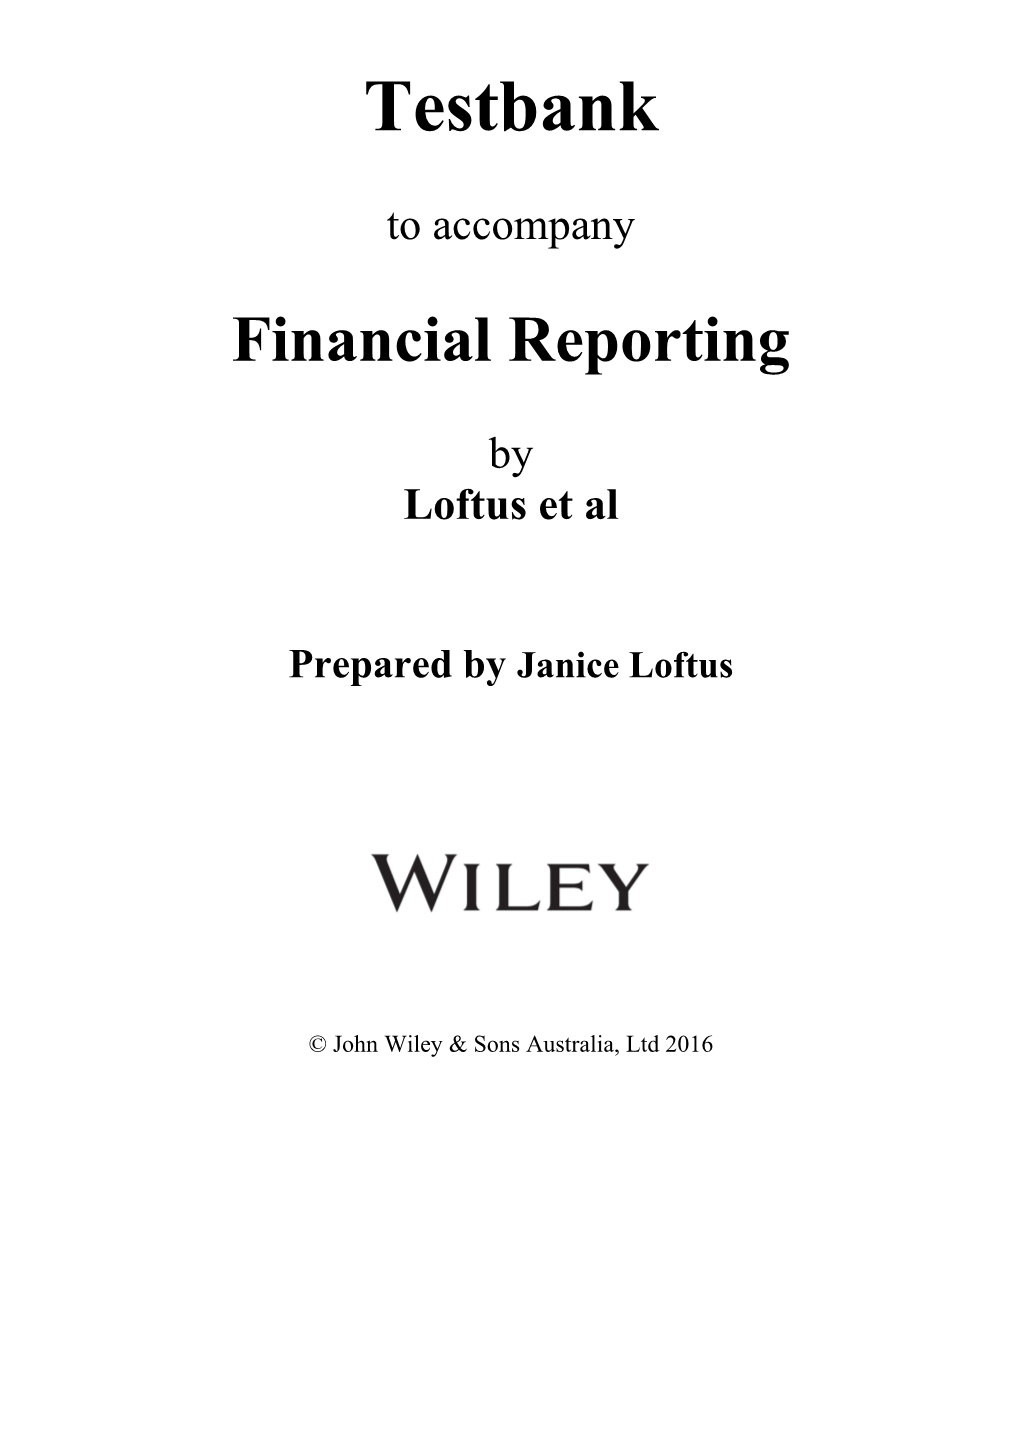 Testbank to Accompany: Financial Reporting 1E by Loftus Et Al